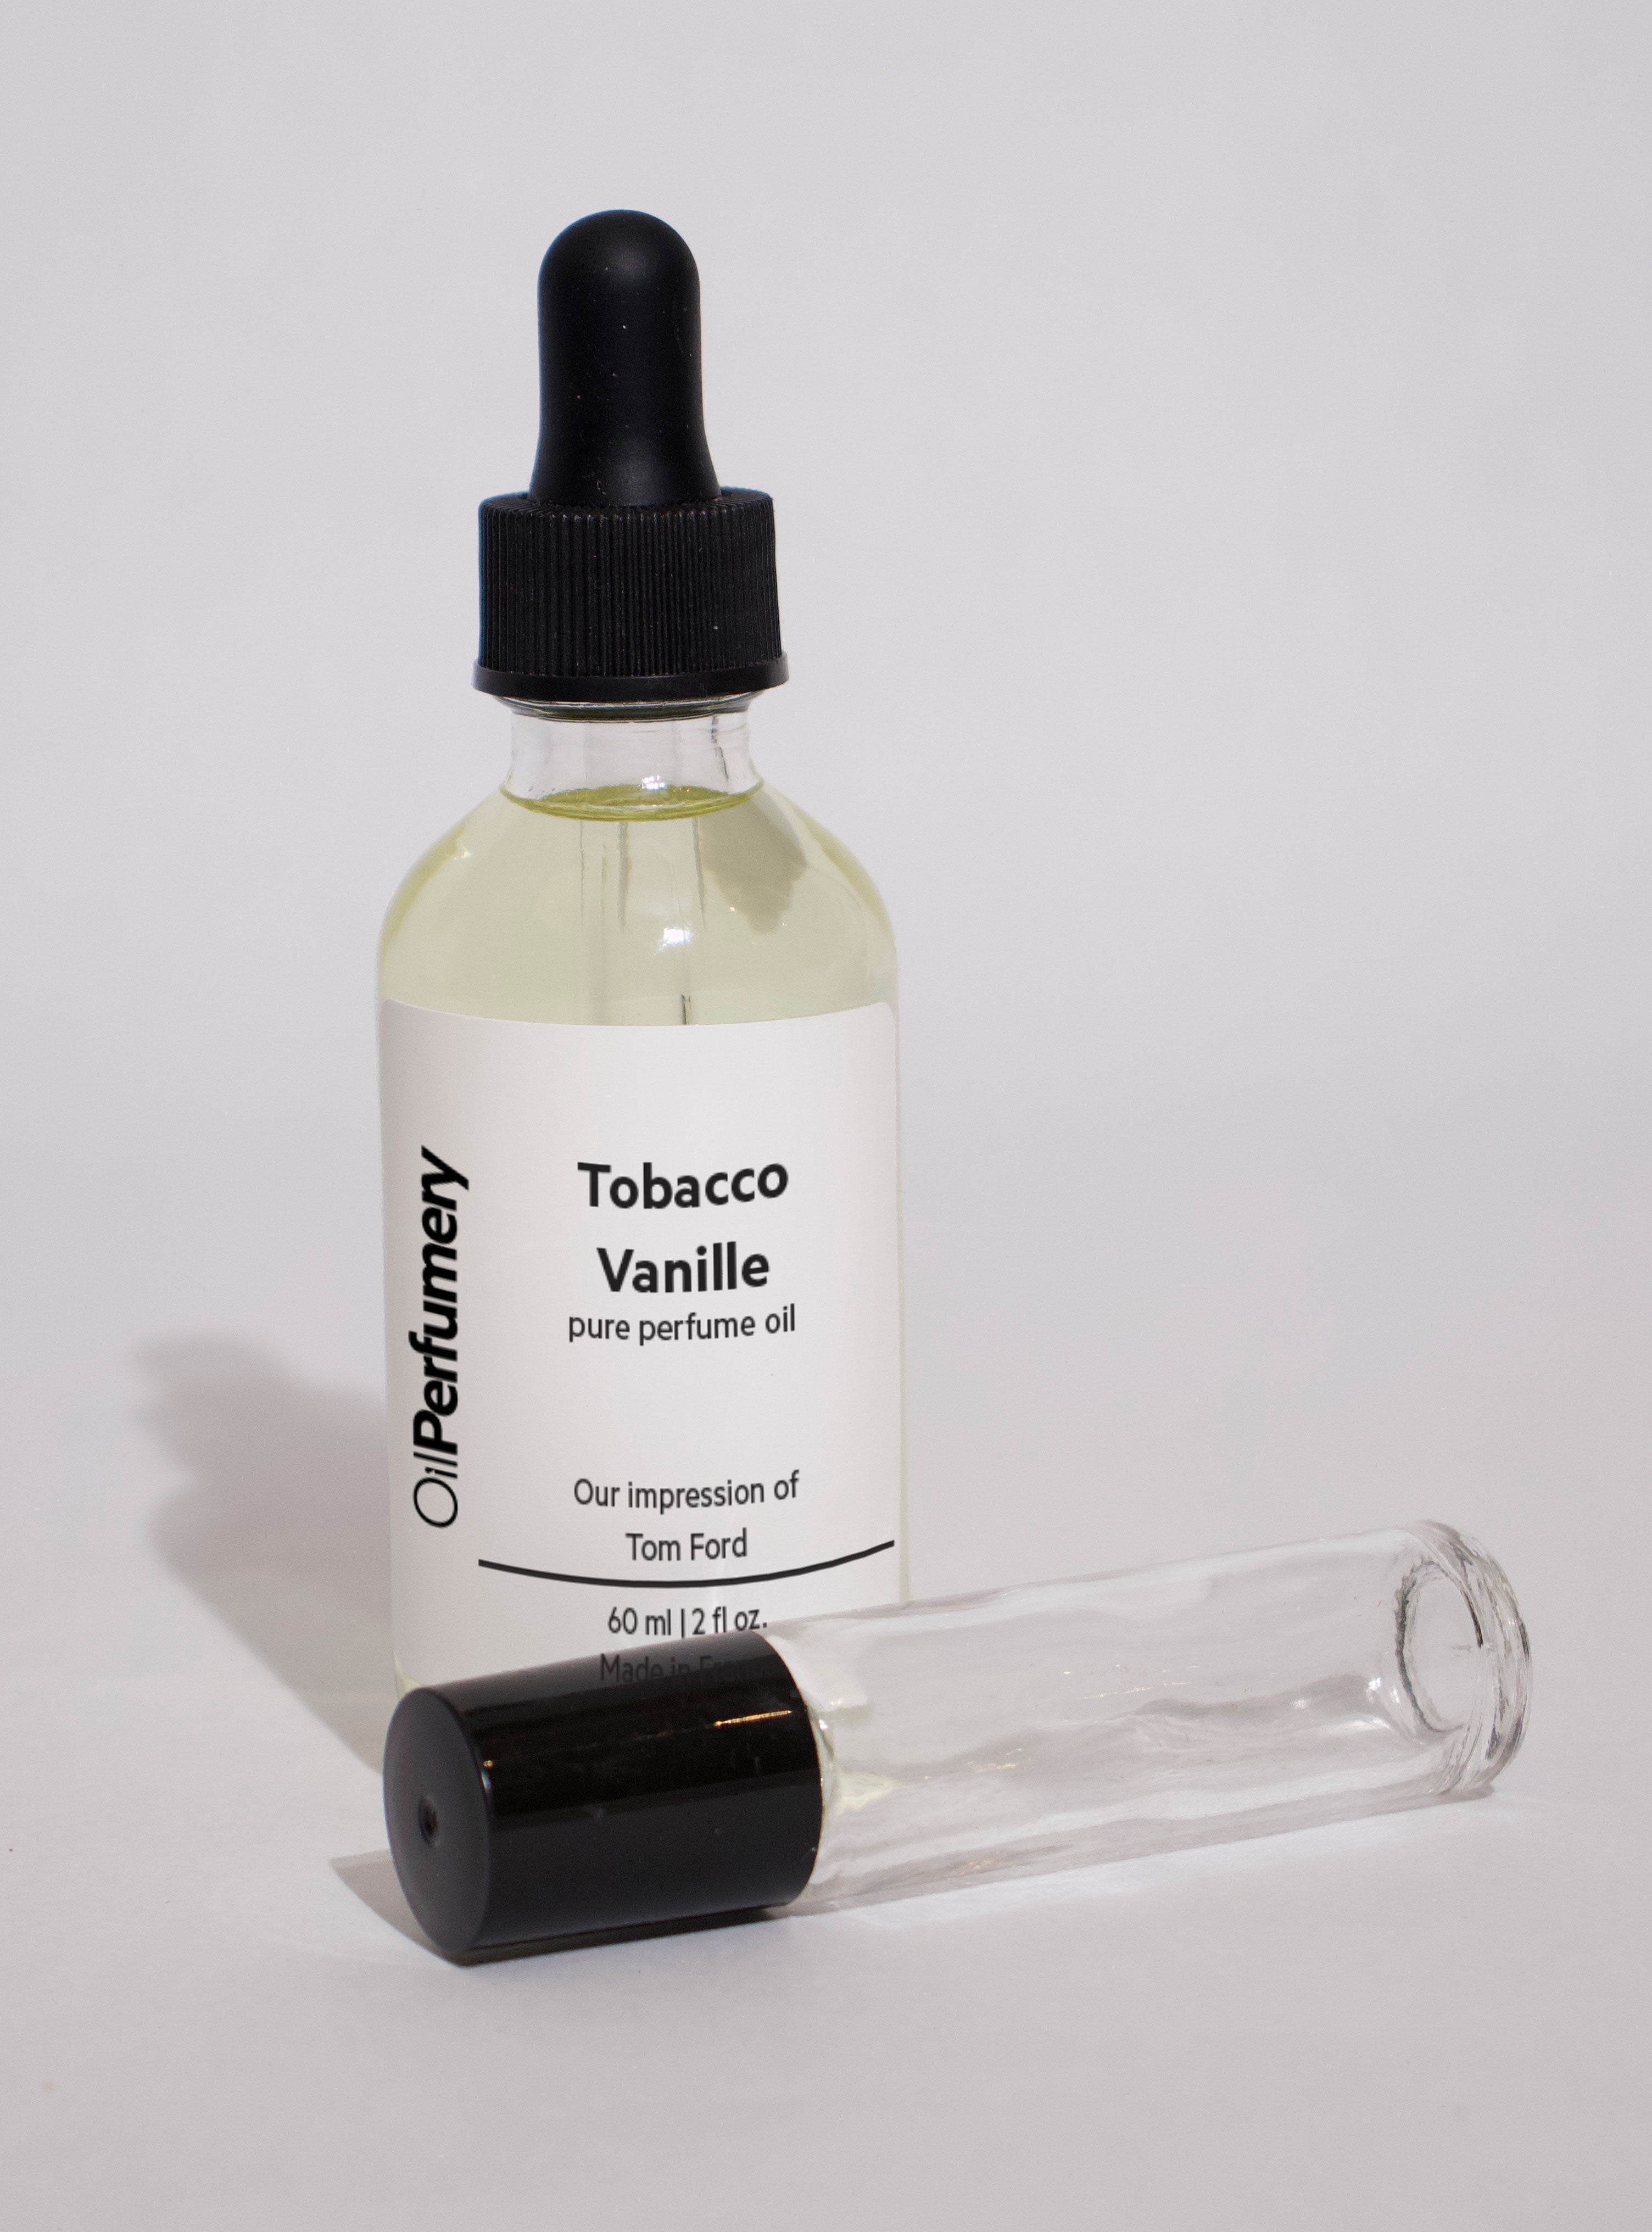 Tobacco Vanilla Unisex Fragrance Perfume Body Oils Uncut Long Lasting.